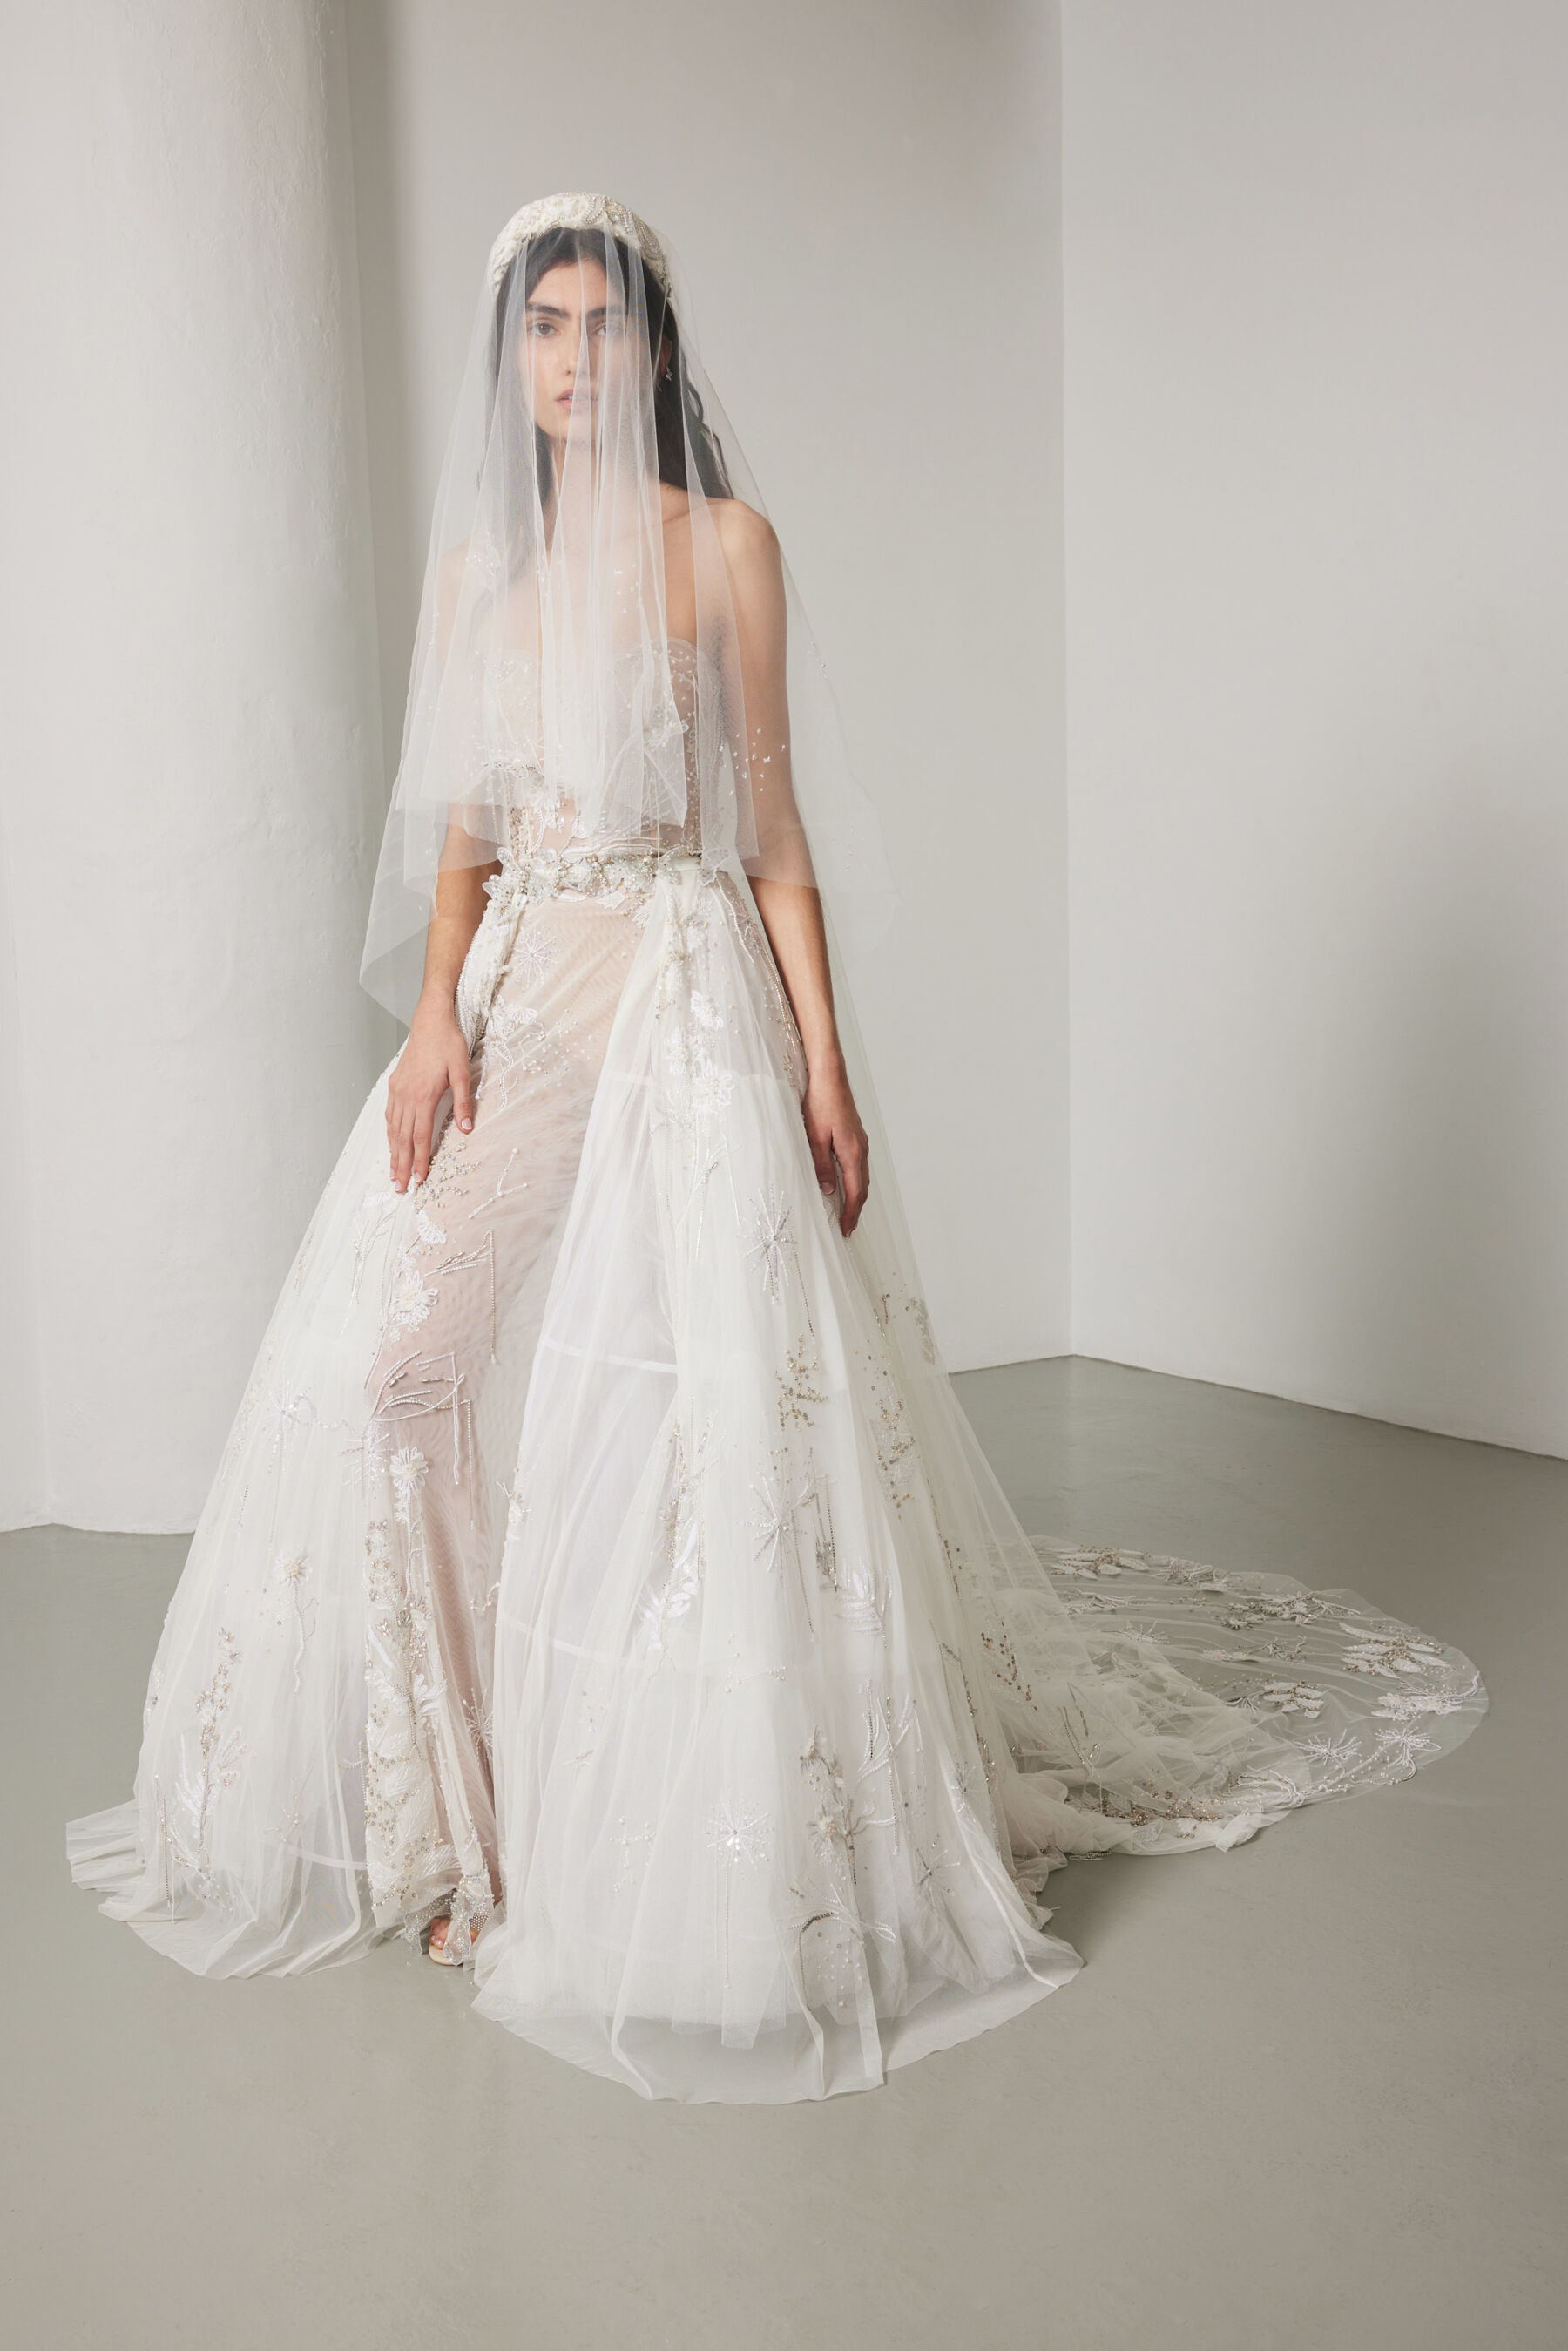 Hermione de Paula wedding dress & veil